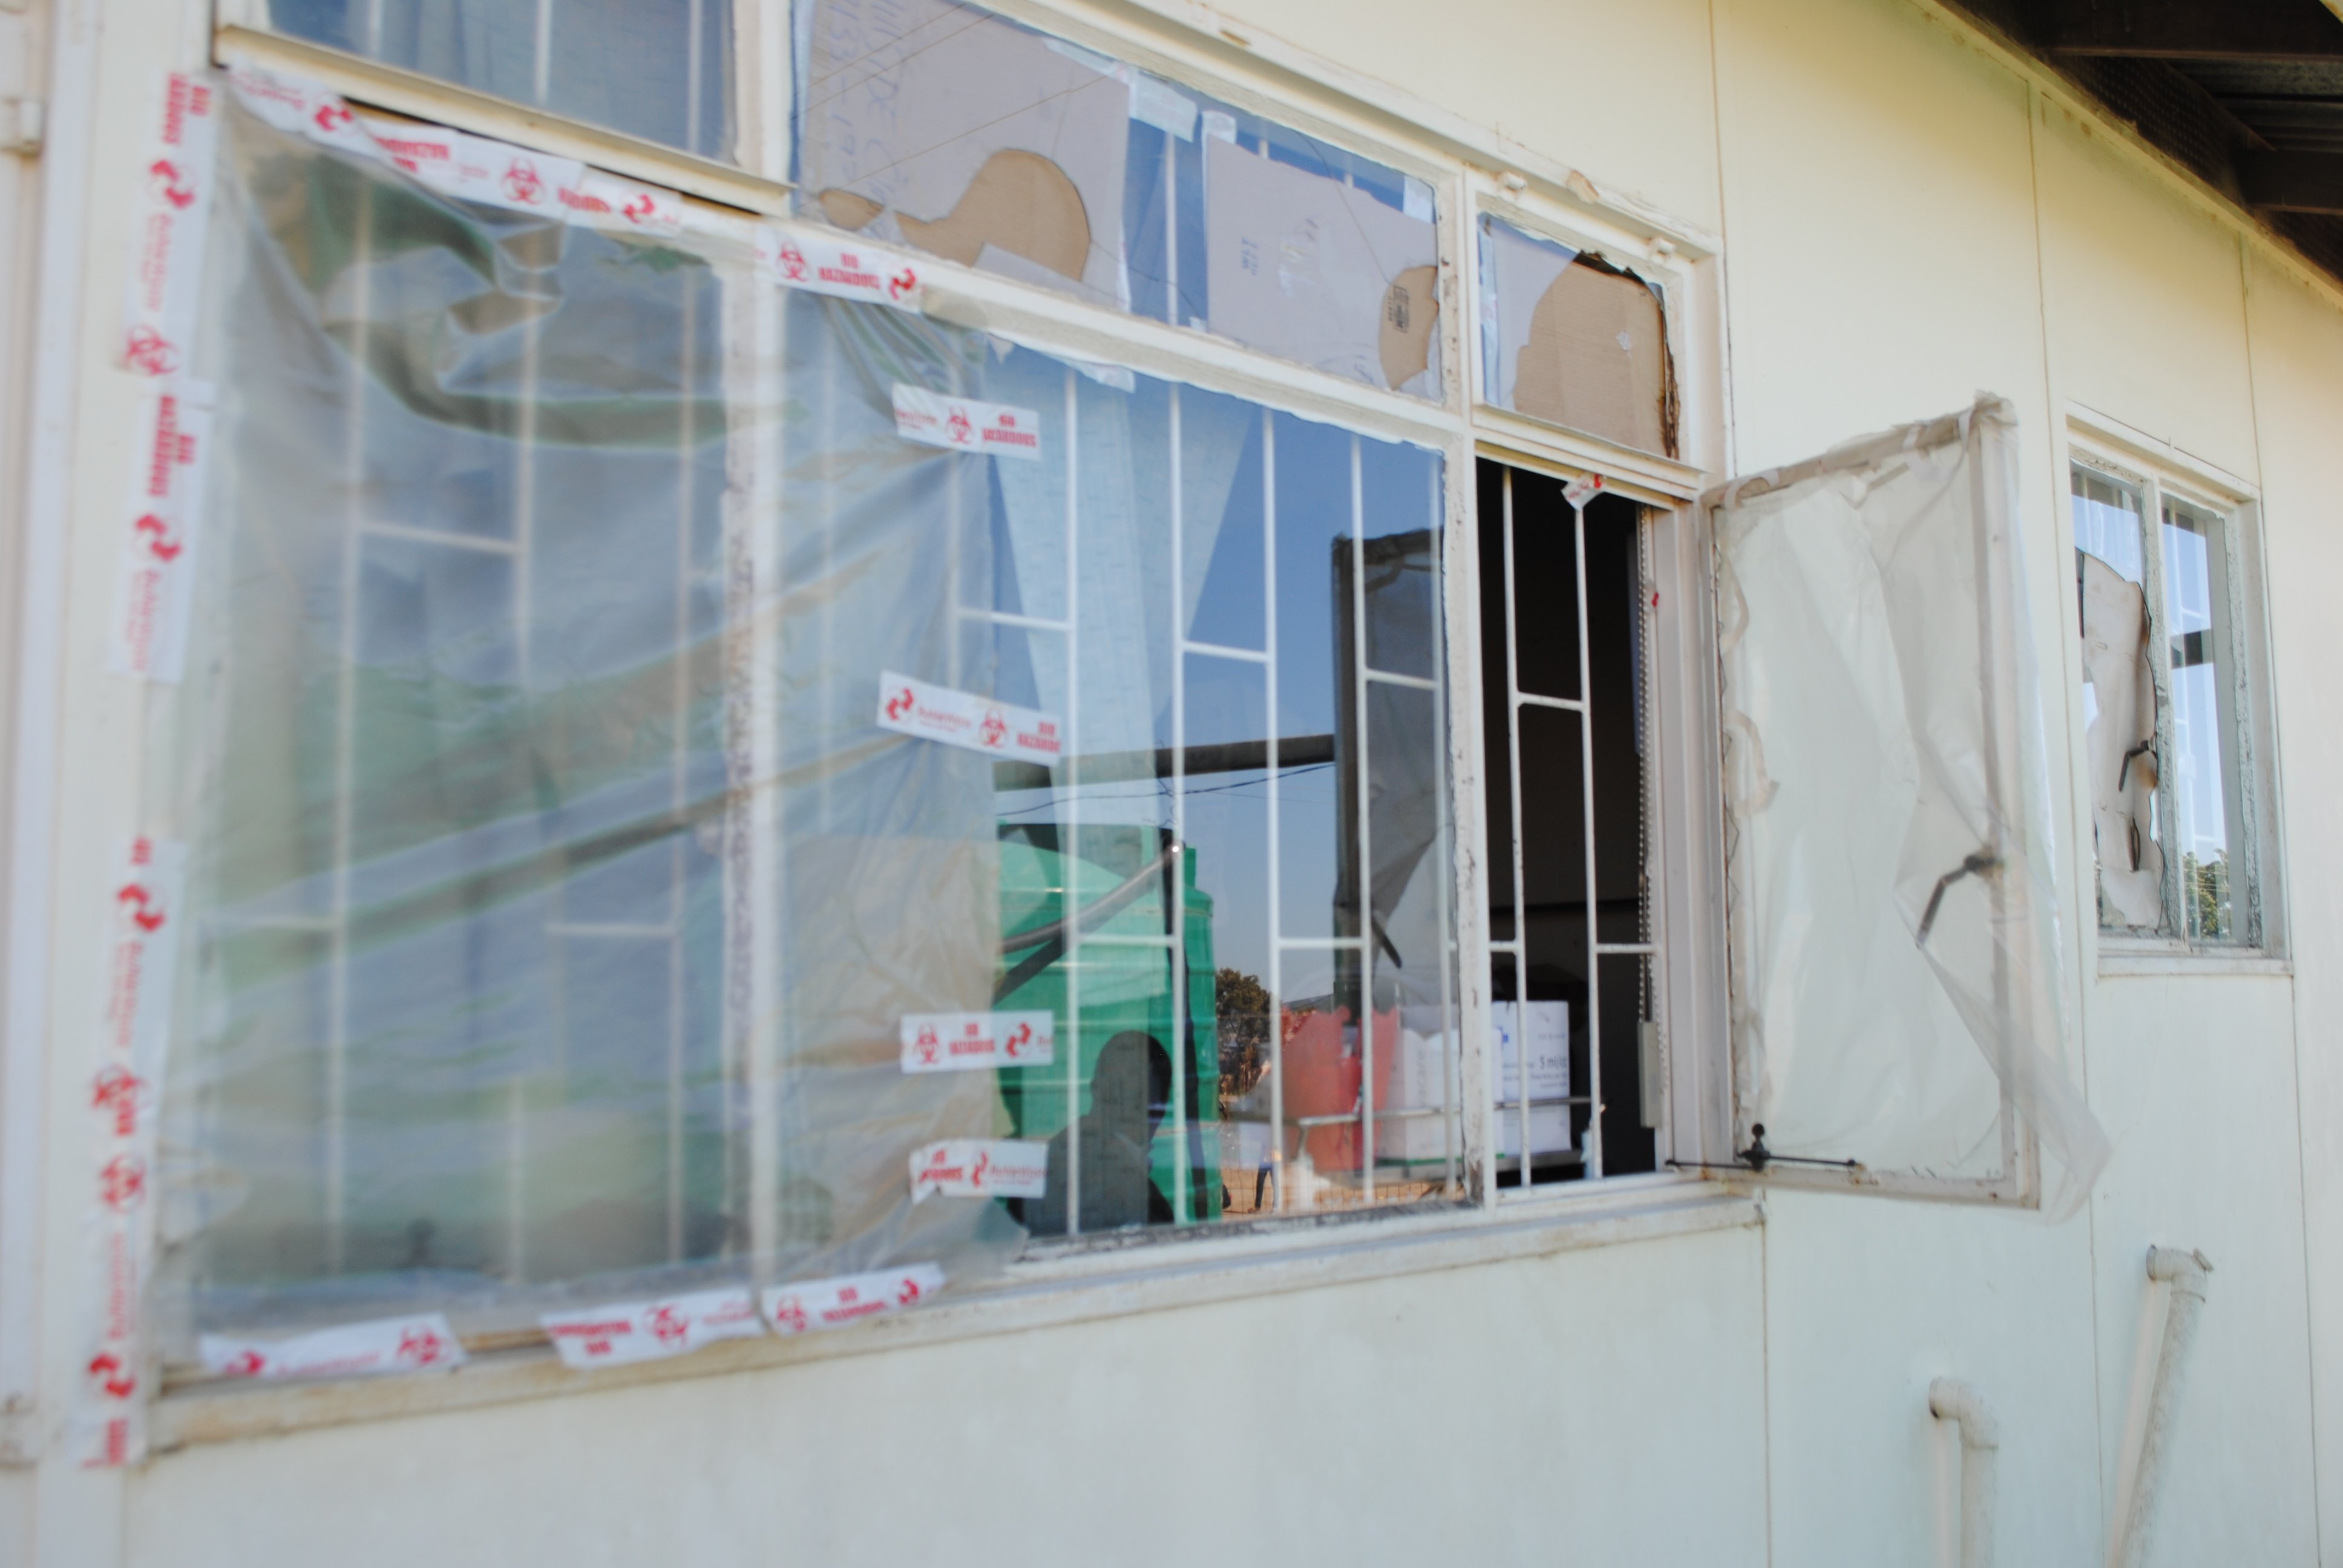 Damaged windows at Hillside clinic.